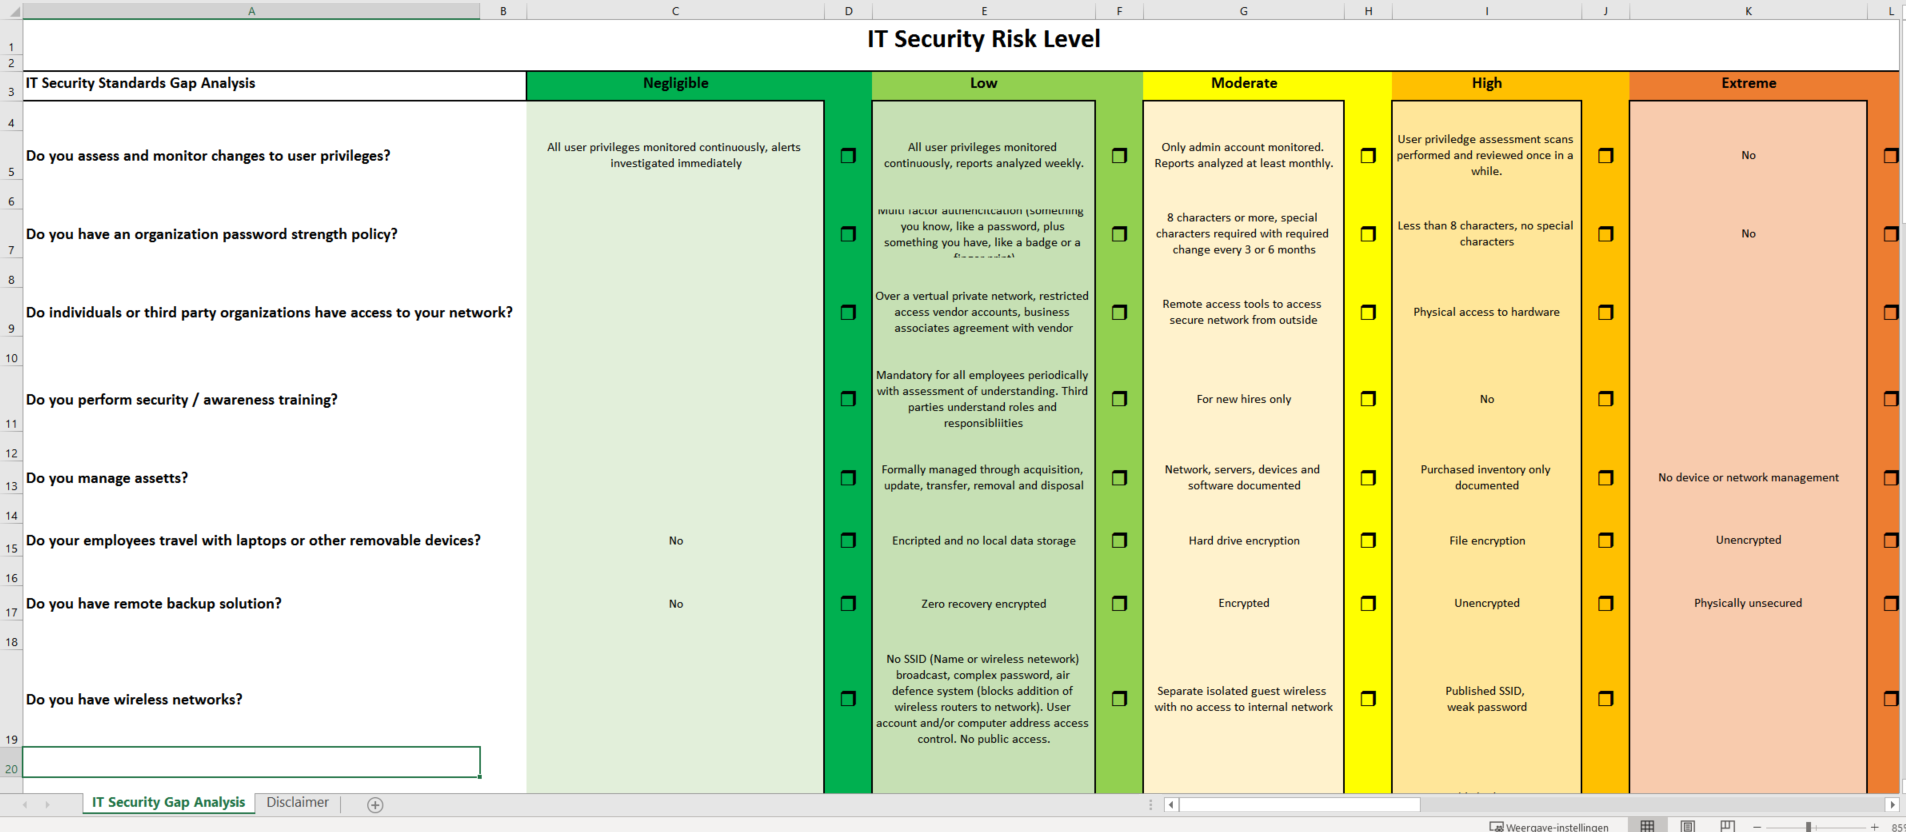 Internal It Security Gap Analysis Templates At Allbusinesstemplates Com